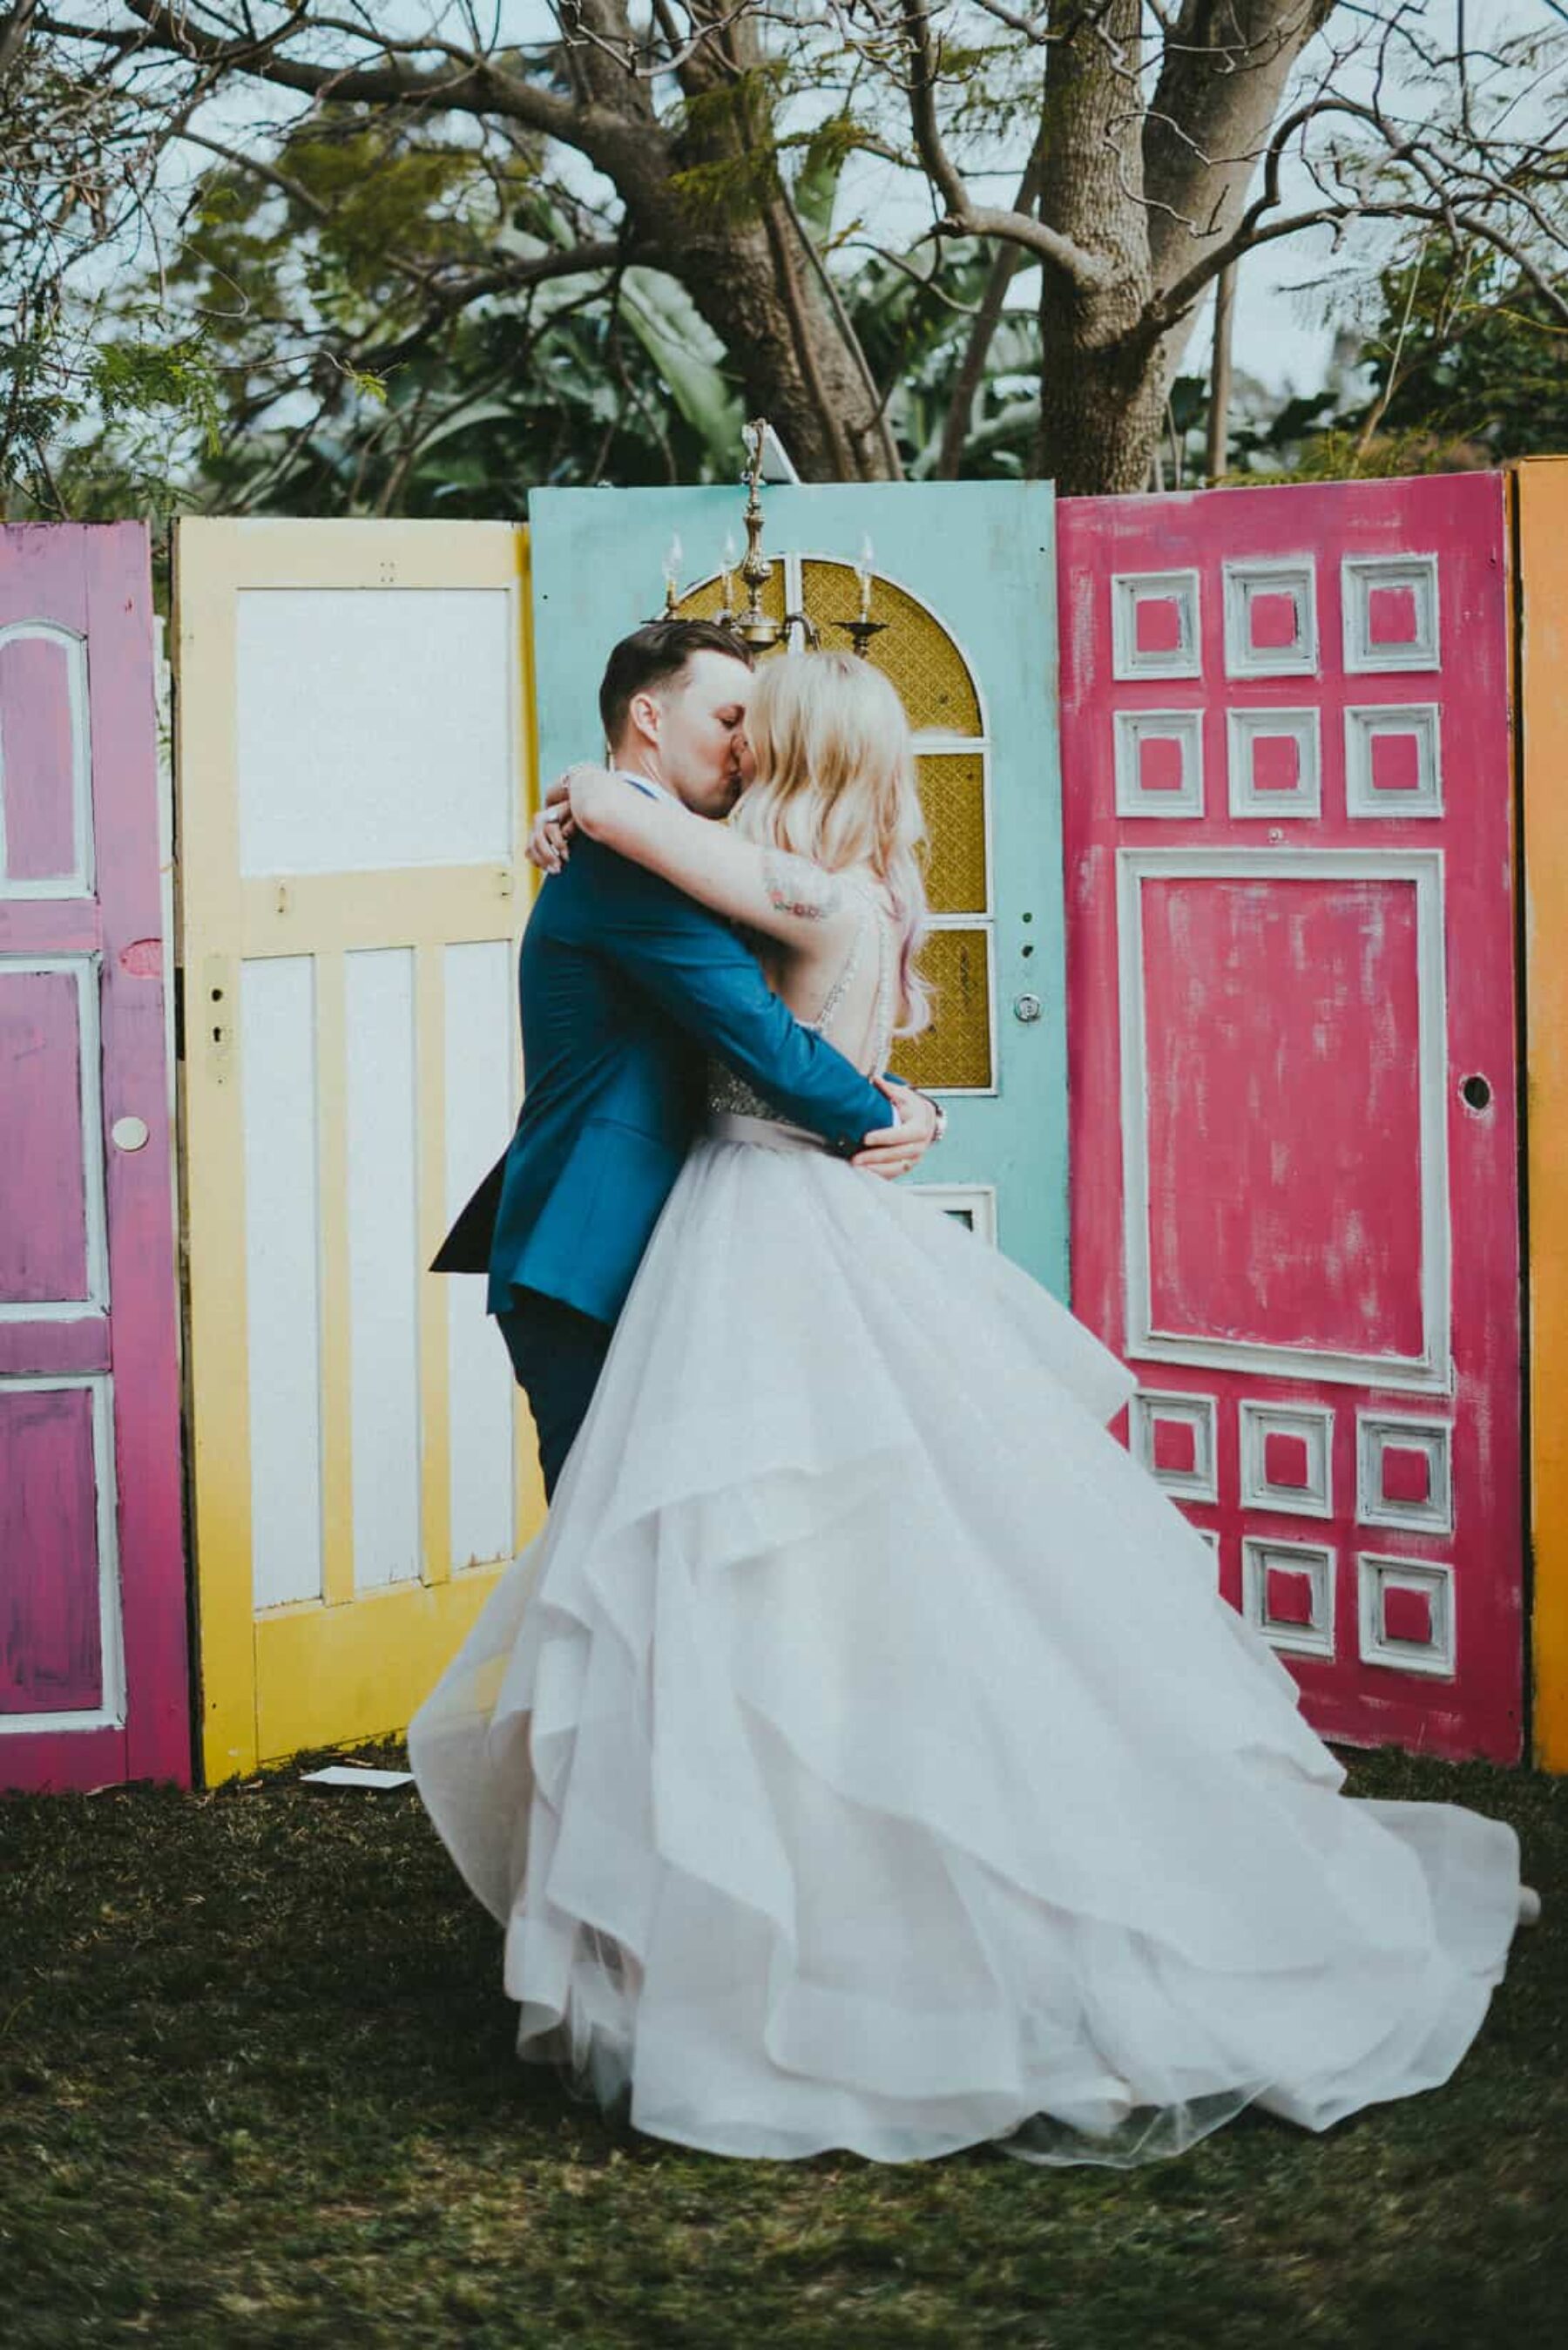 colourful painted door wedding backdrop